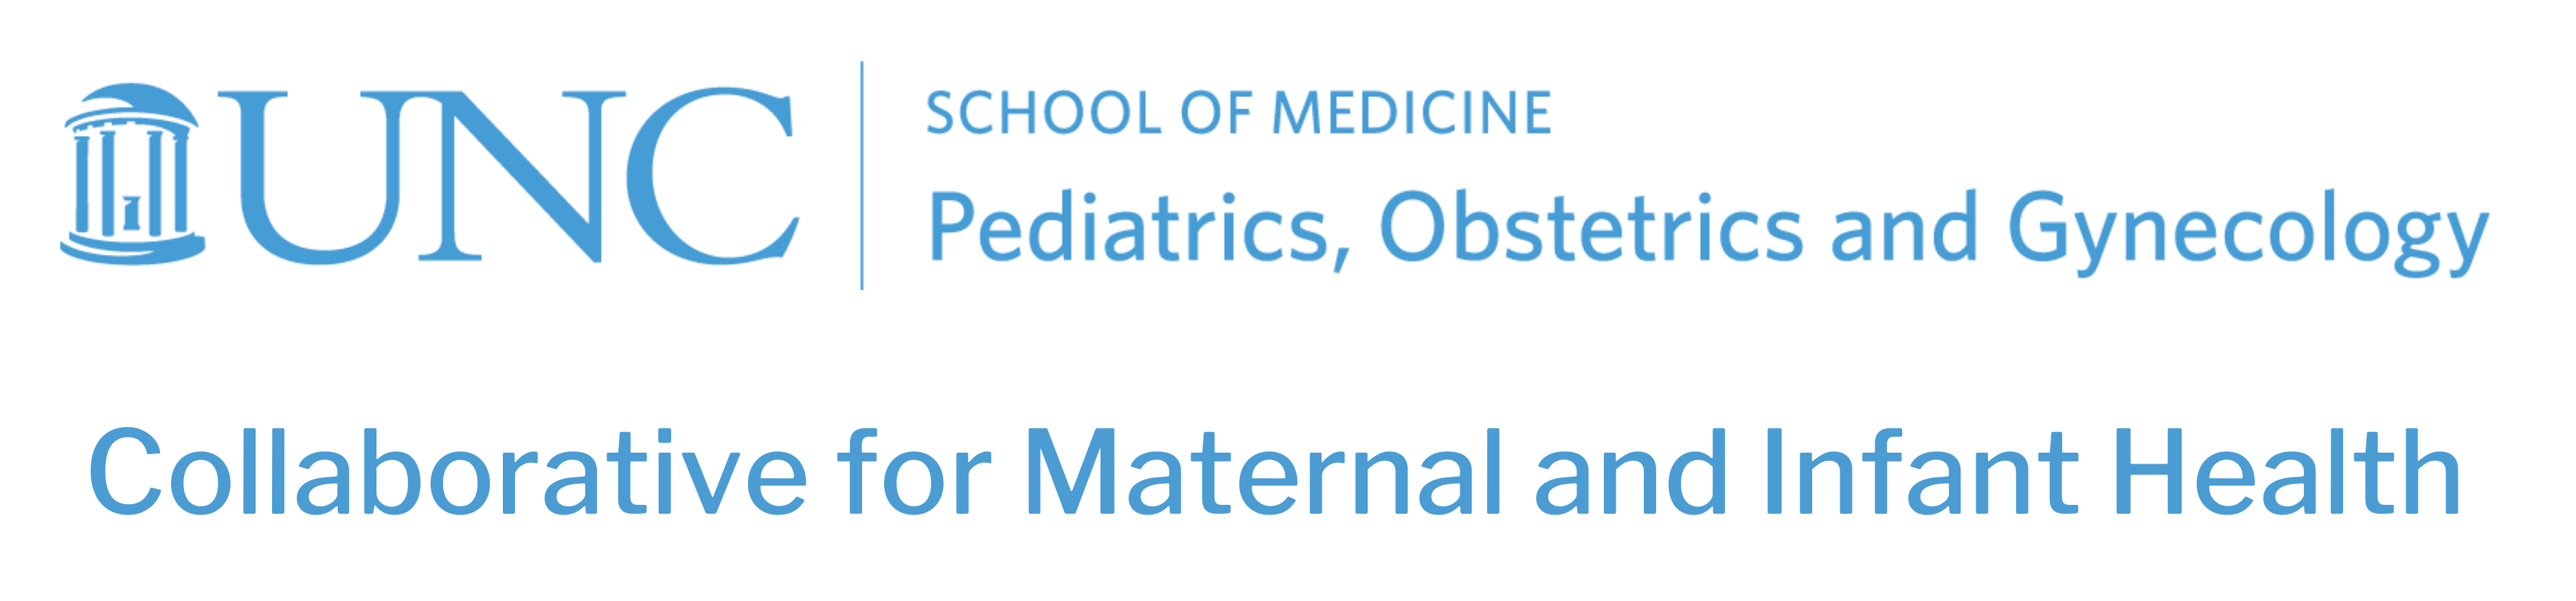 Center for Maternal and Infant Health logo